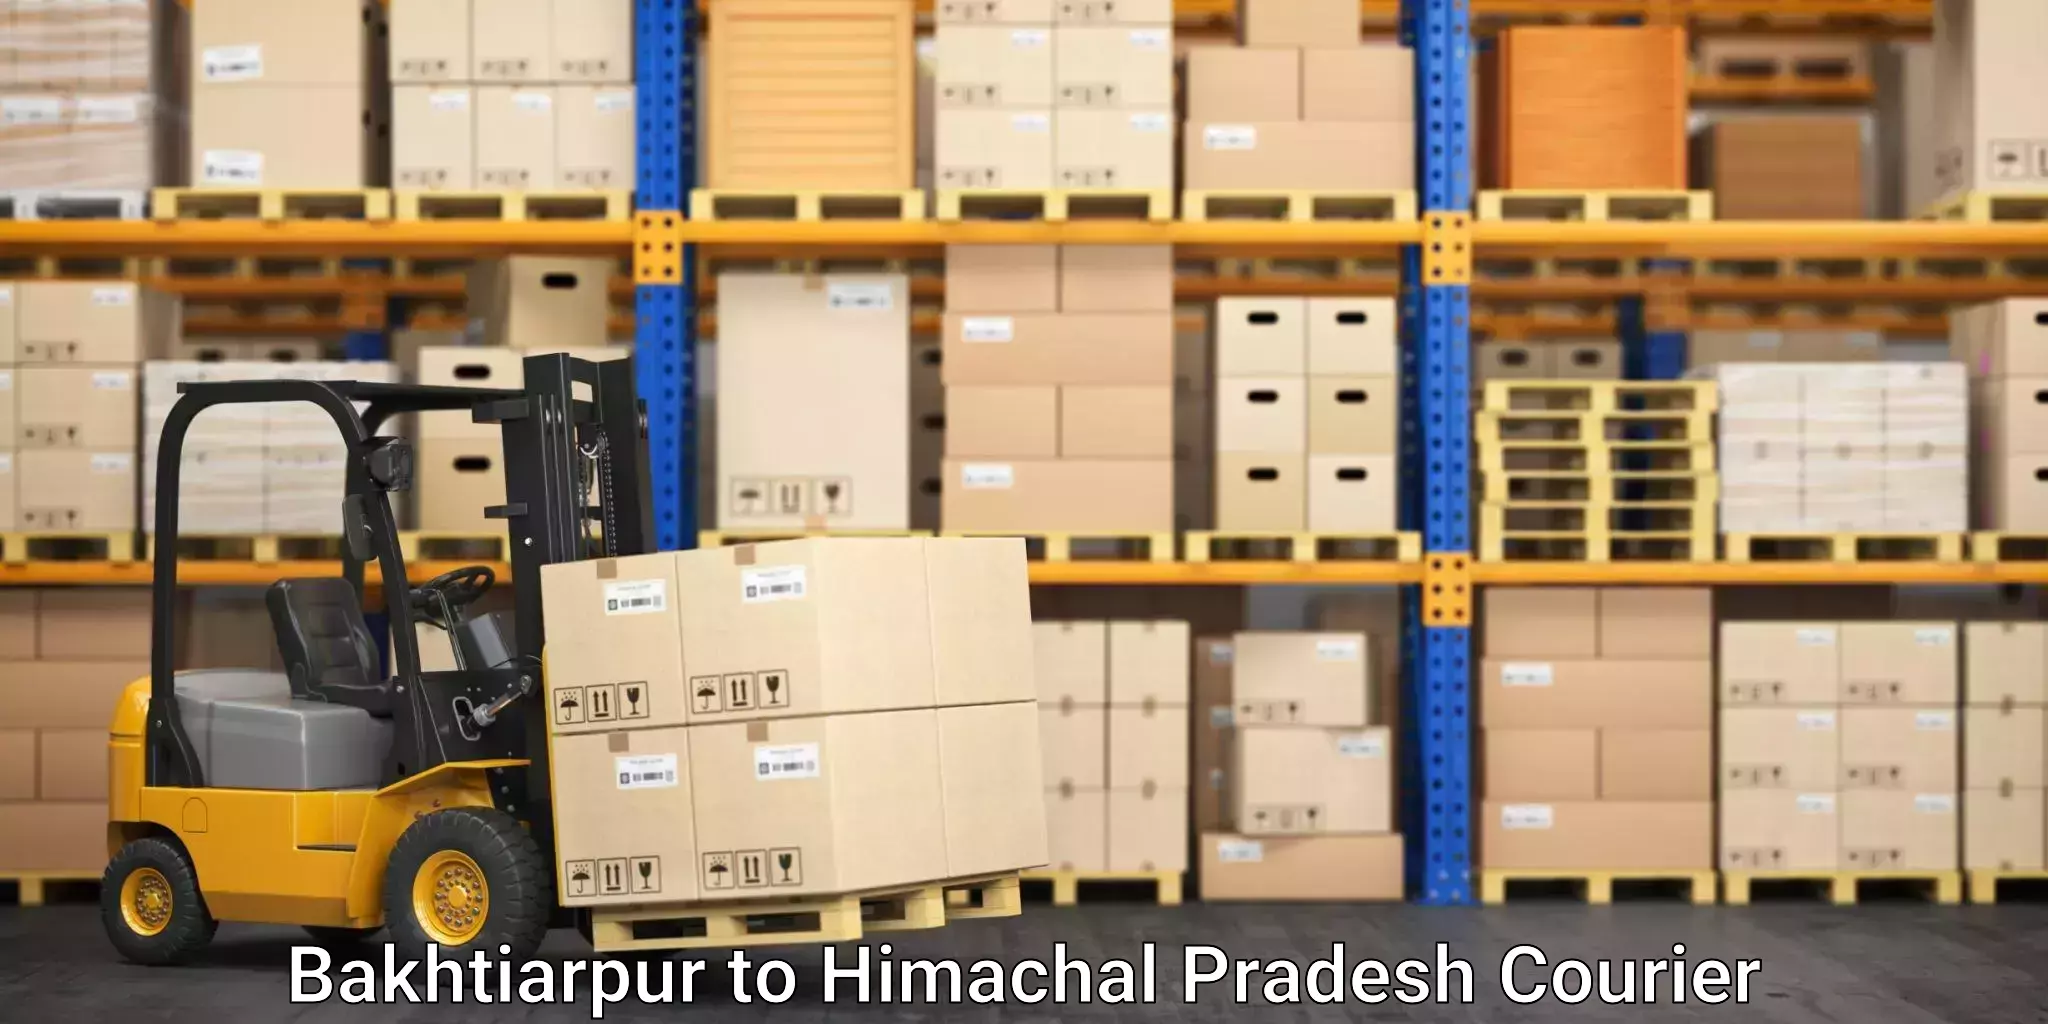 Furniture relocation experts Bakhtiarpur to Himachal Pradesh